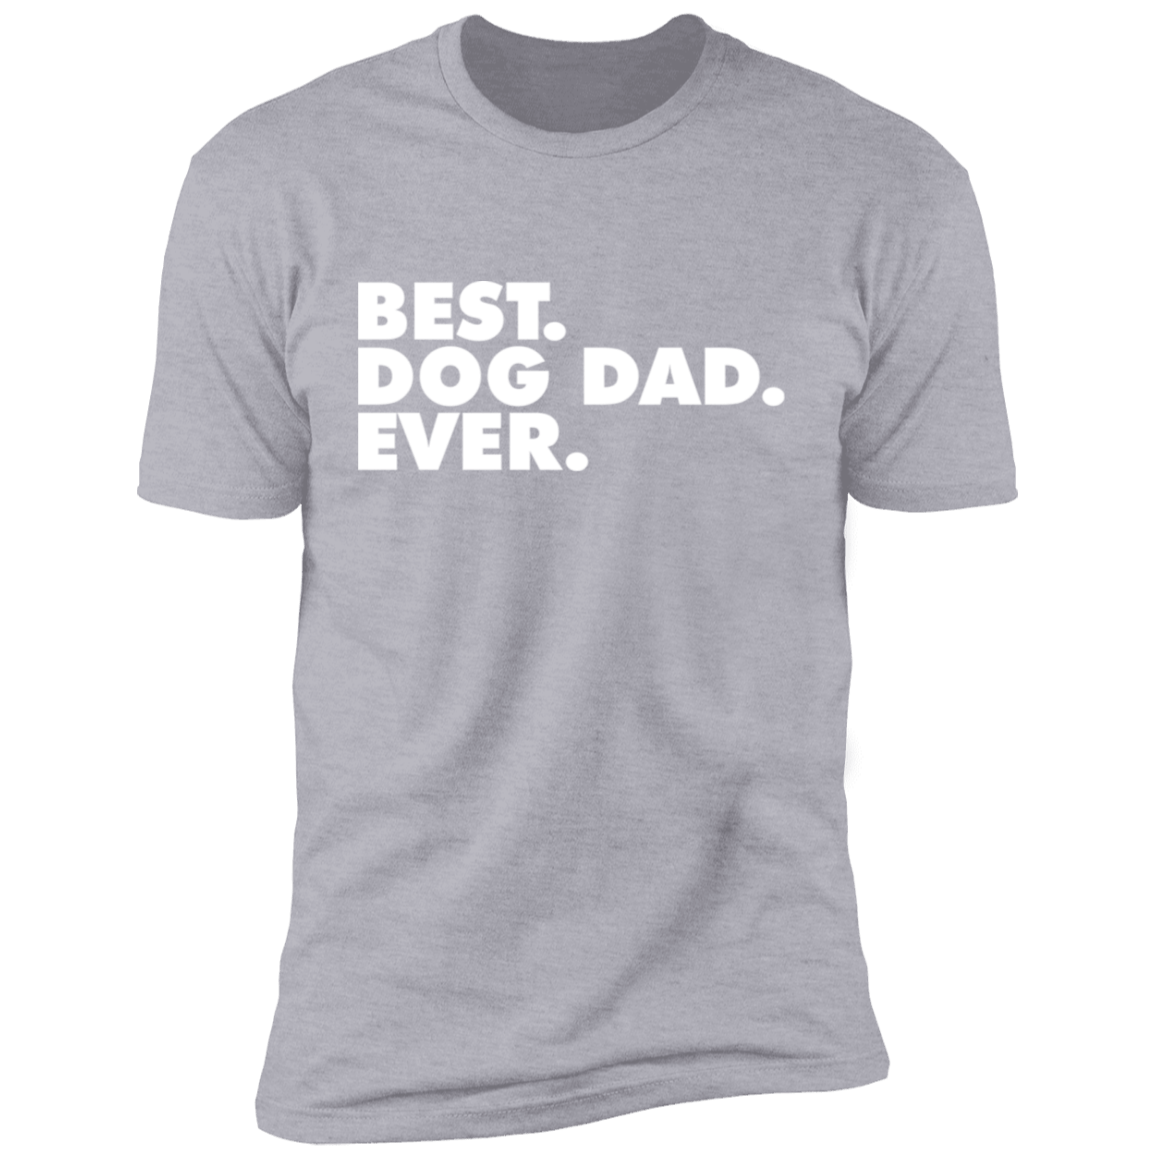 Best. Dog Dad. Ever.